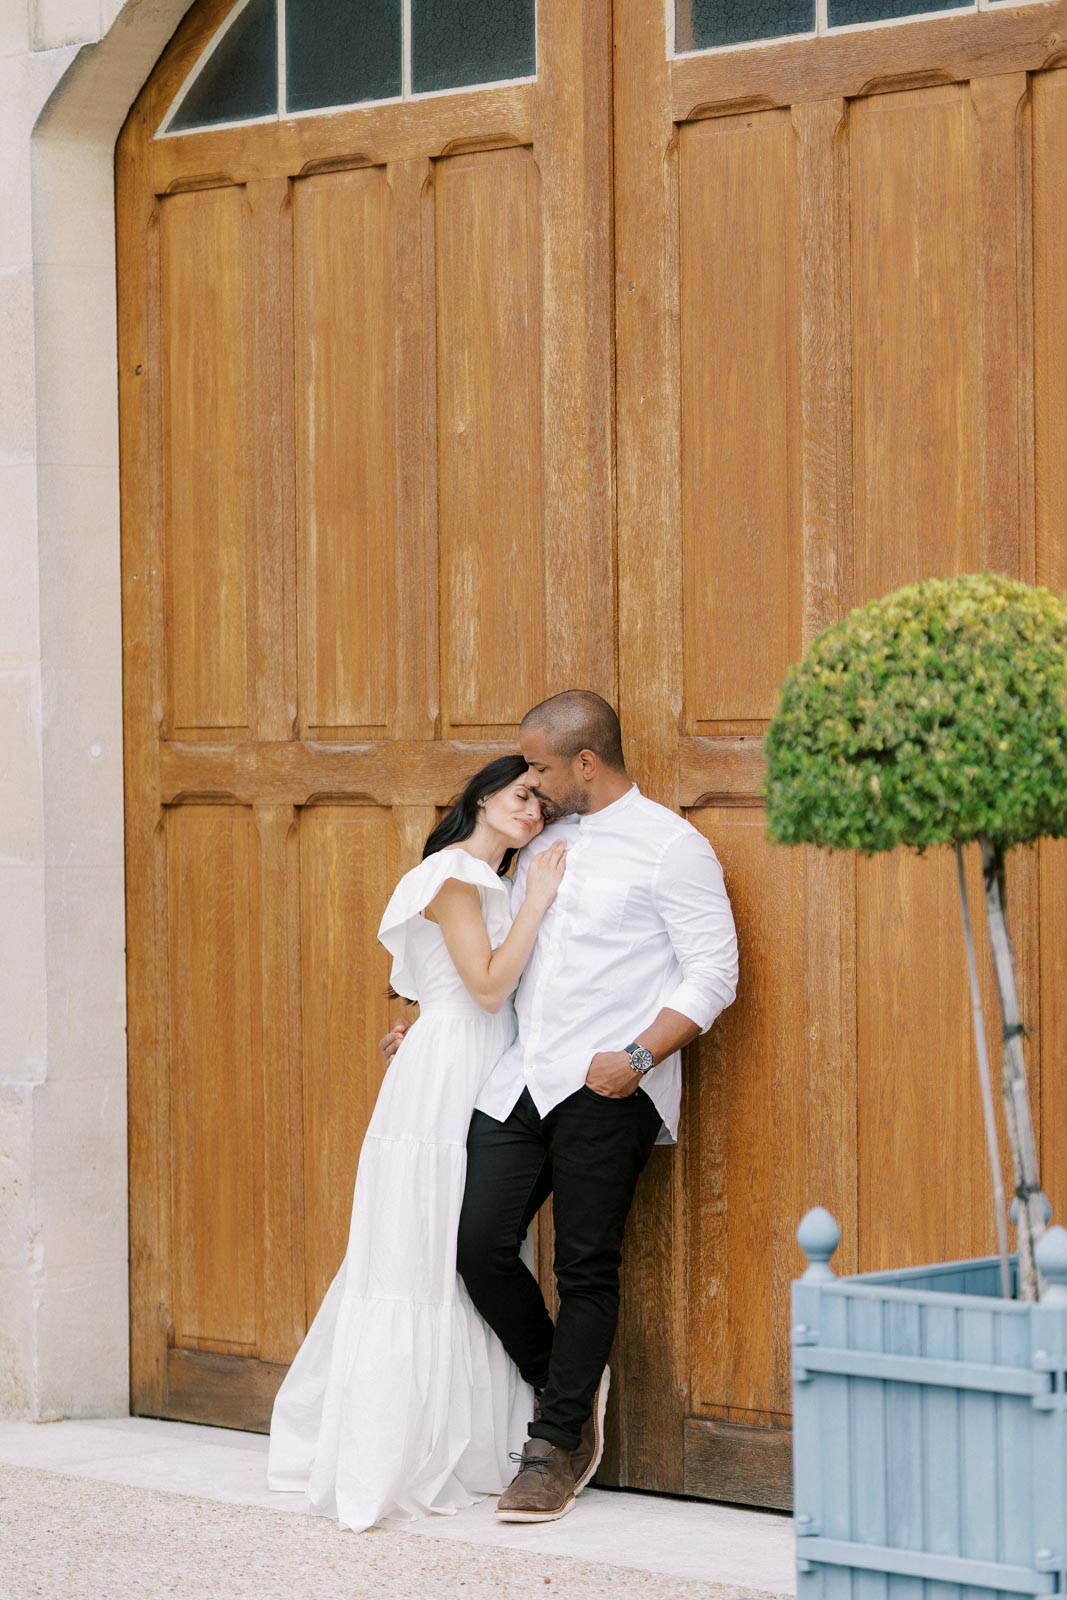 Champagne France Wedding Photographers | Chernogorov Photography